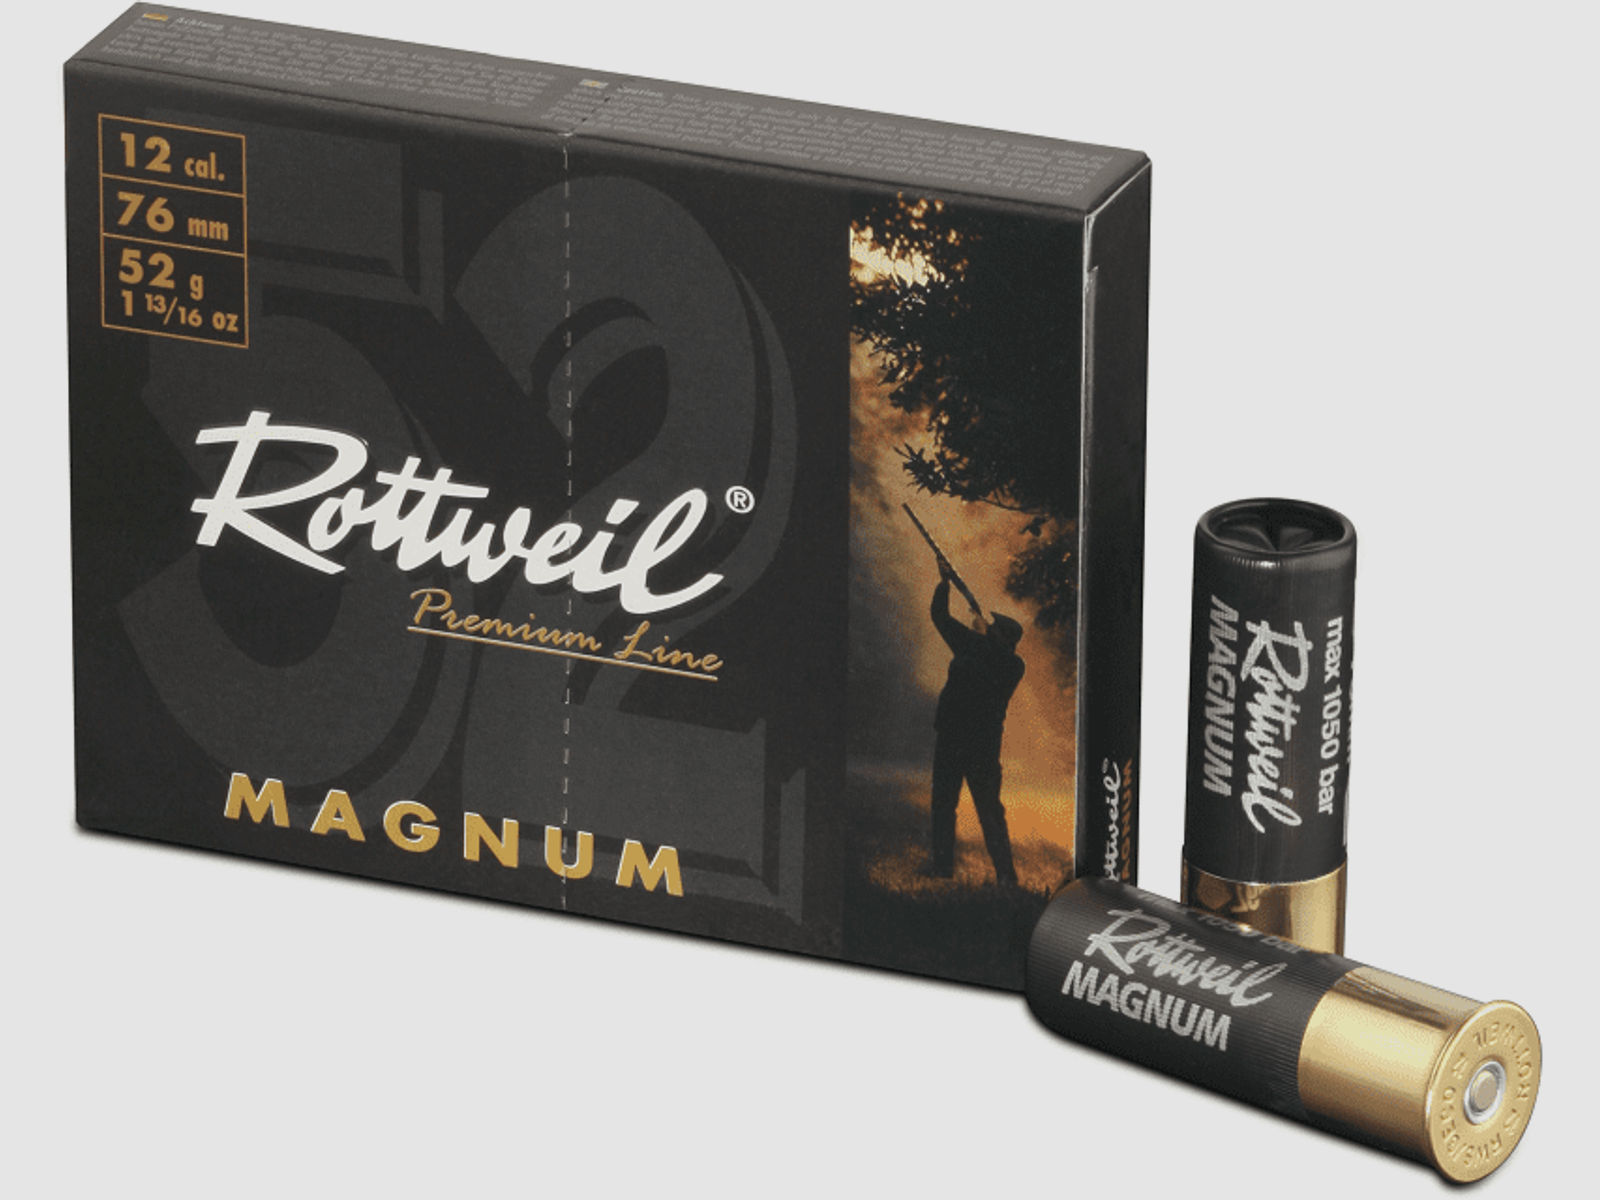 Rottweil Magnum 12/76 52g. 2,7mm